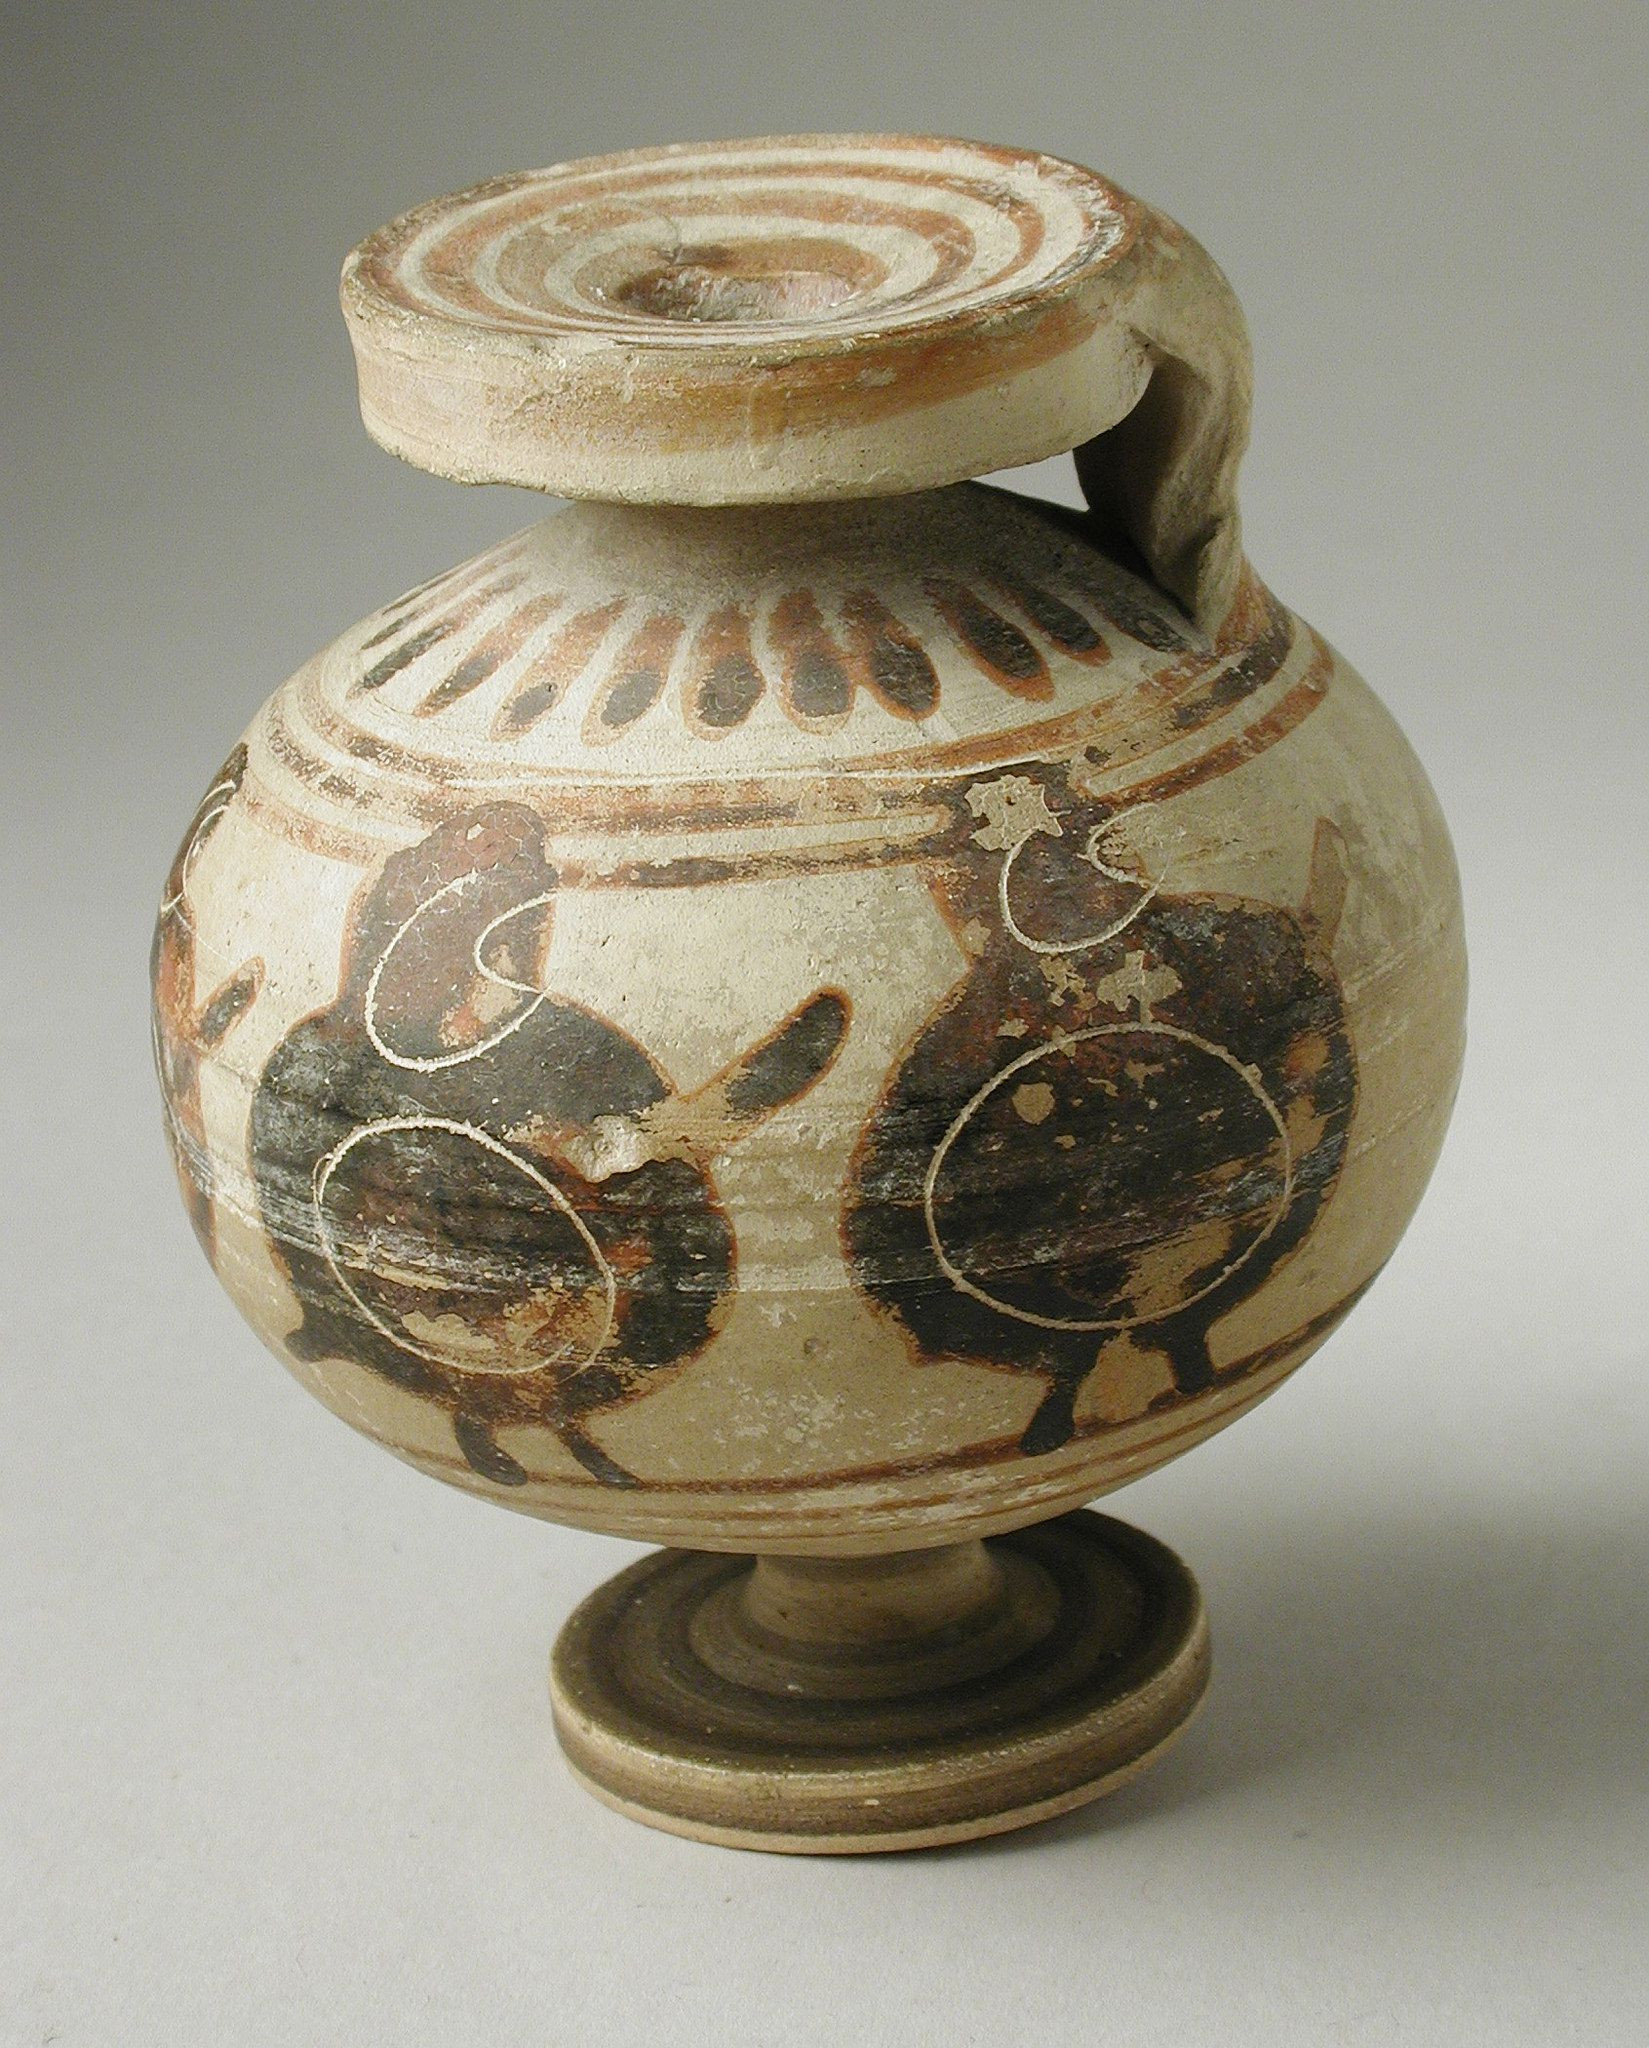 30 Lovely Black and White Ceramic Vase 2024 free download black and white ceramic vase of periods of ancient greek pottery types of vases in 16395392172 e853f2d11b k 589fa7123df78c4758a422ff